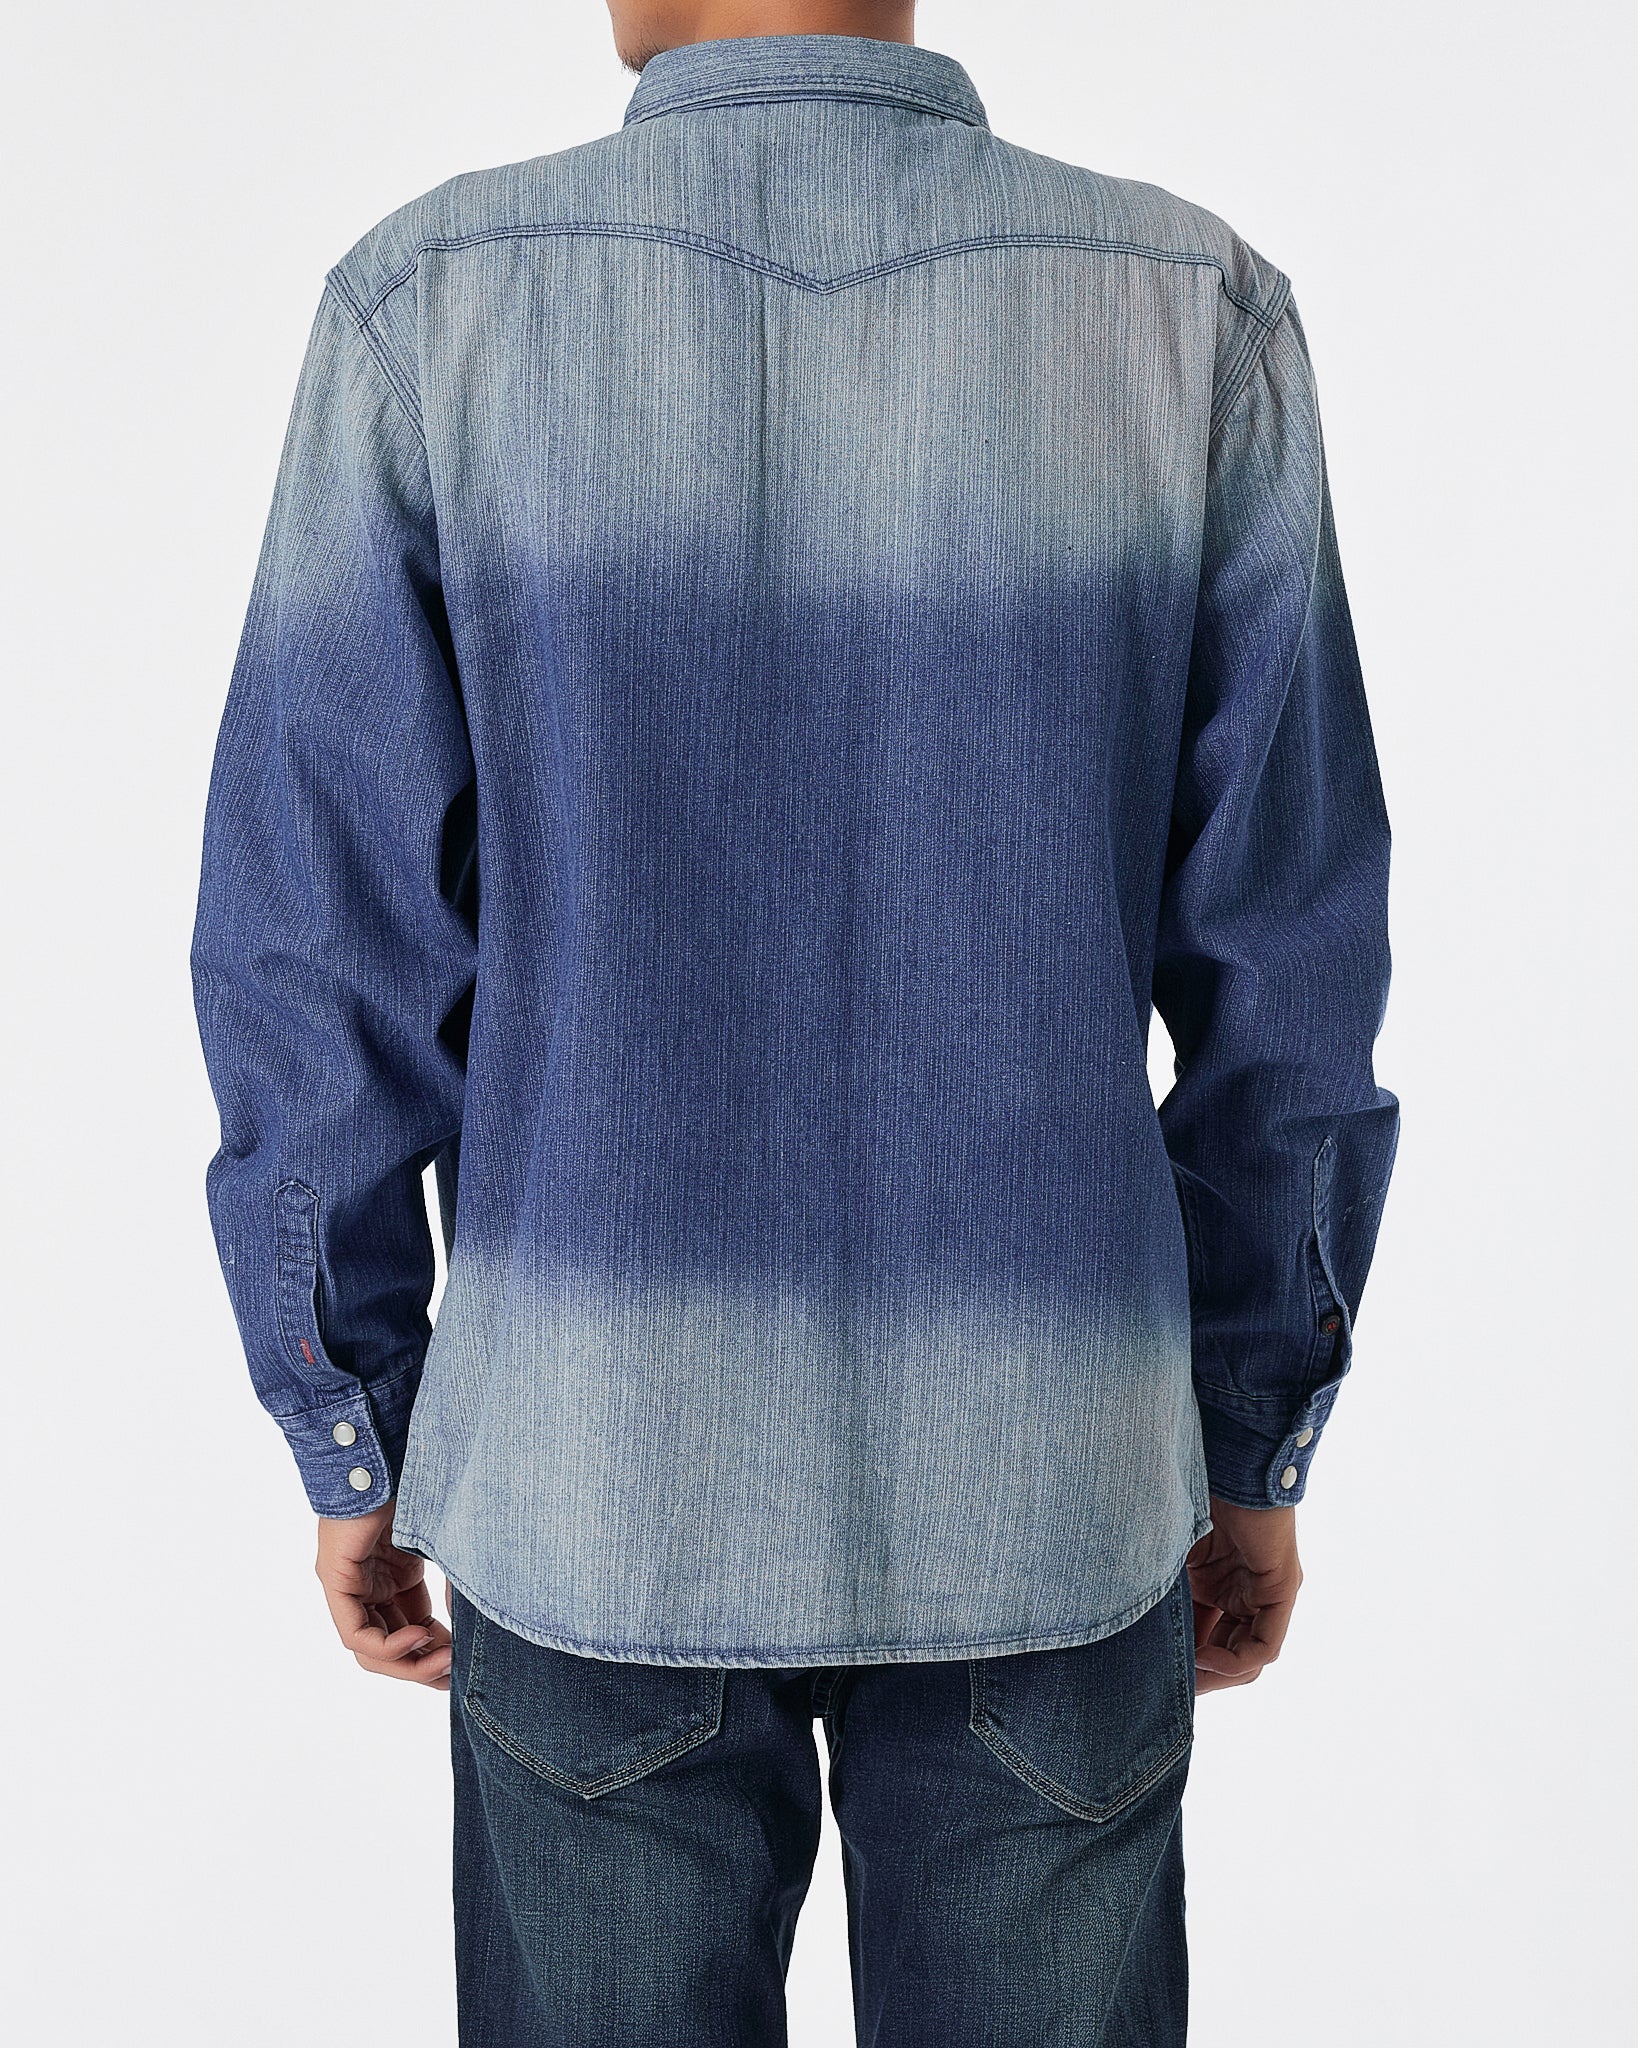 LEV Denim Men Blue Shirts Long Sleeve 24.90